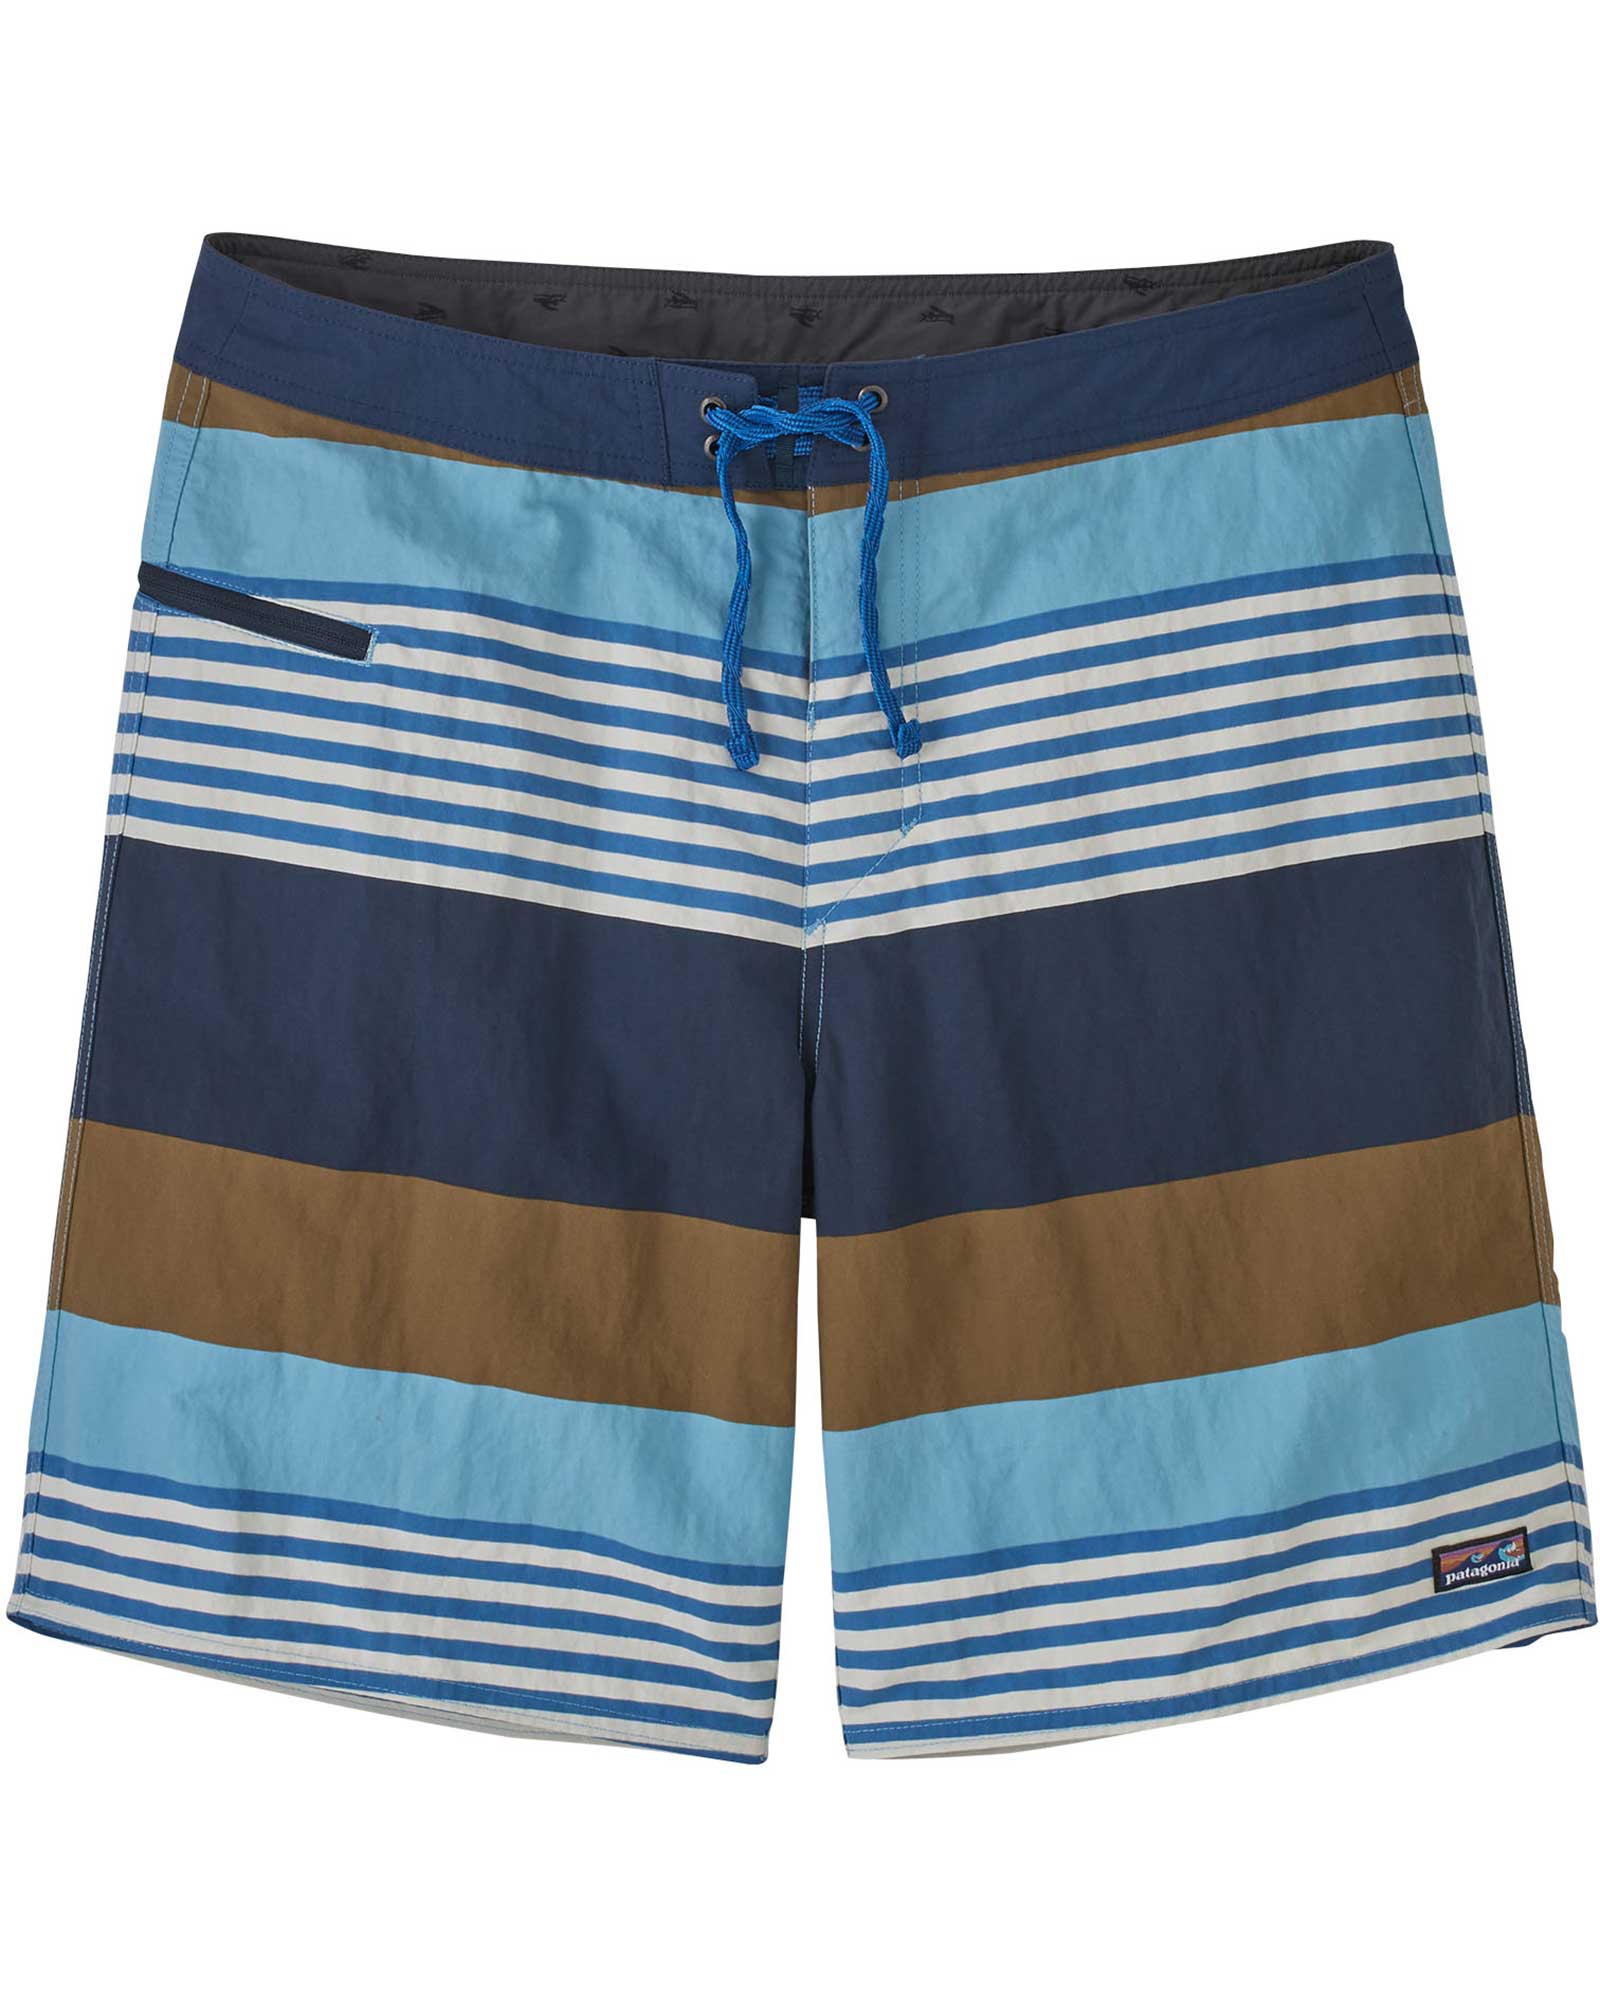 Patagonia Wavefarer Men’s 19" Board Shorts - Lago Blue/Fitz Stripe 36"